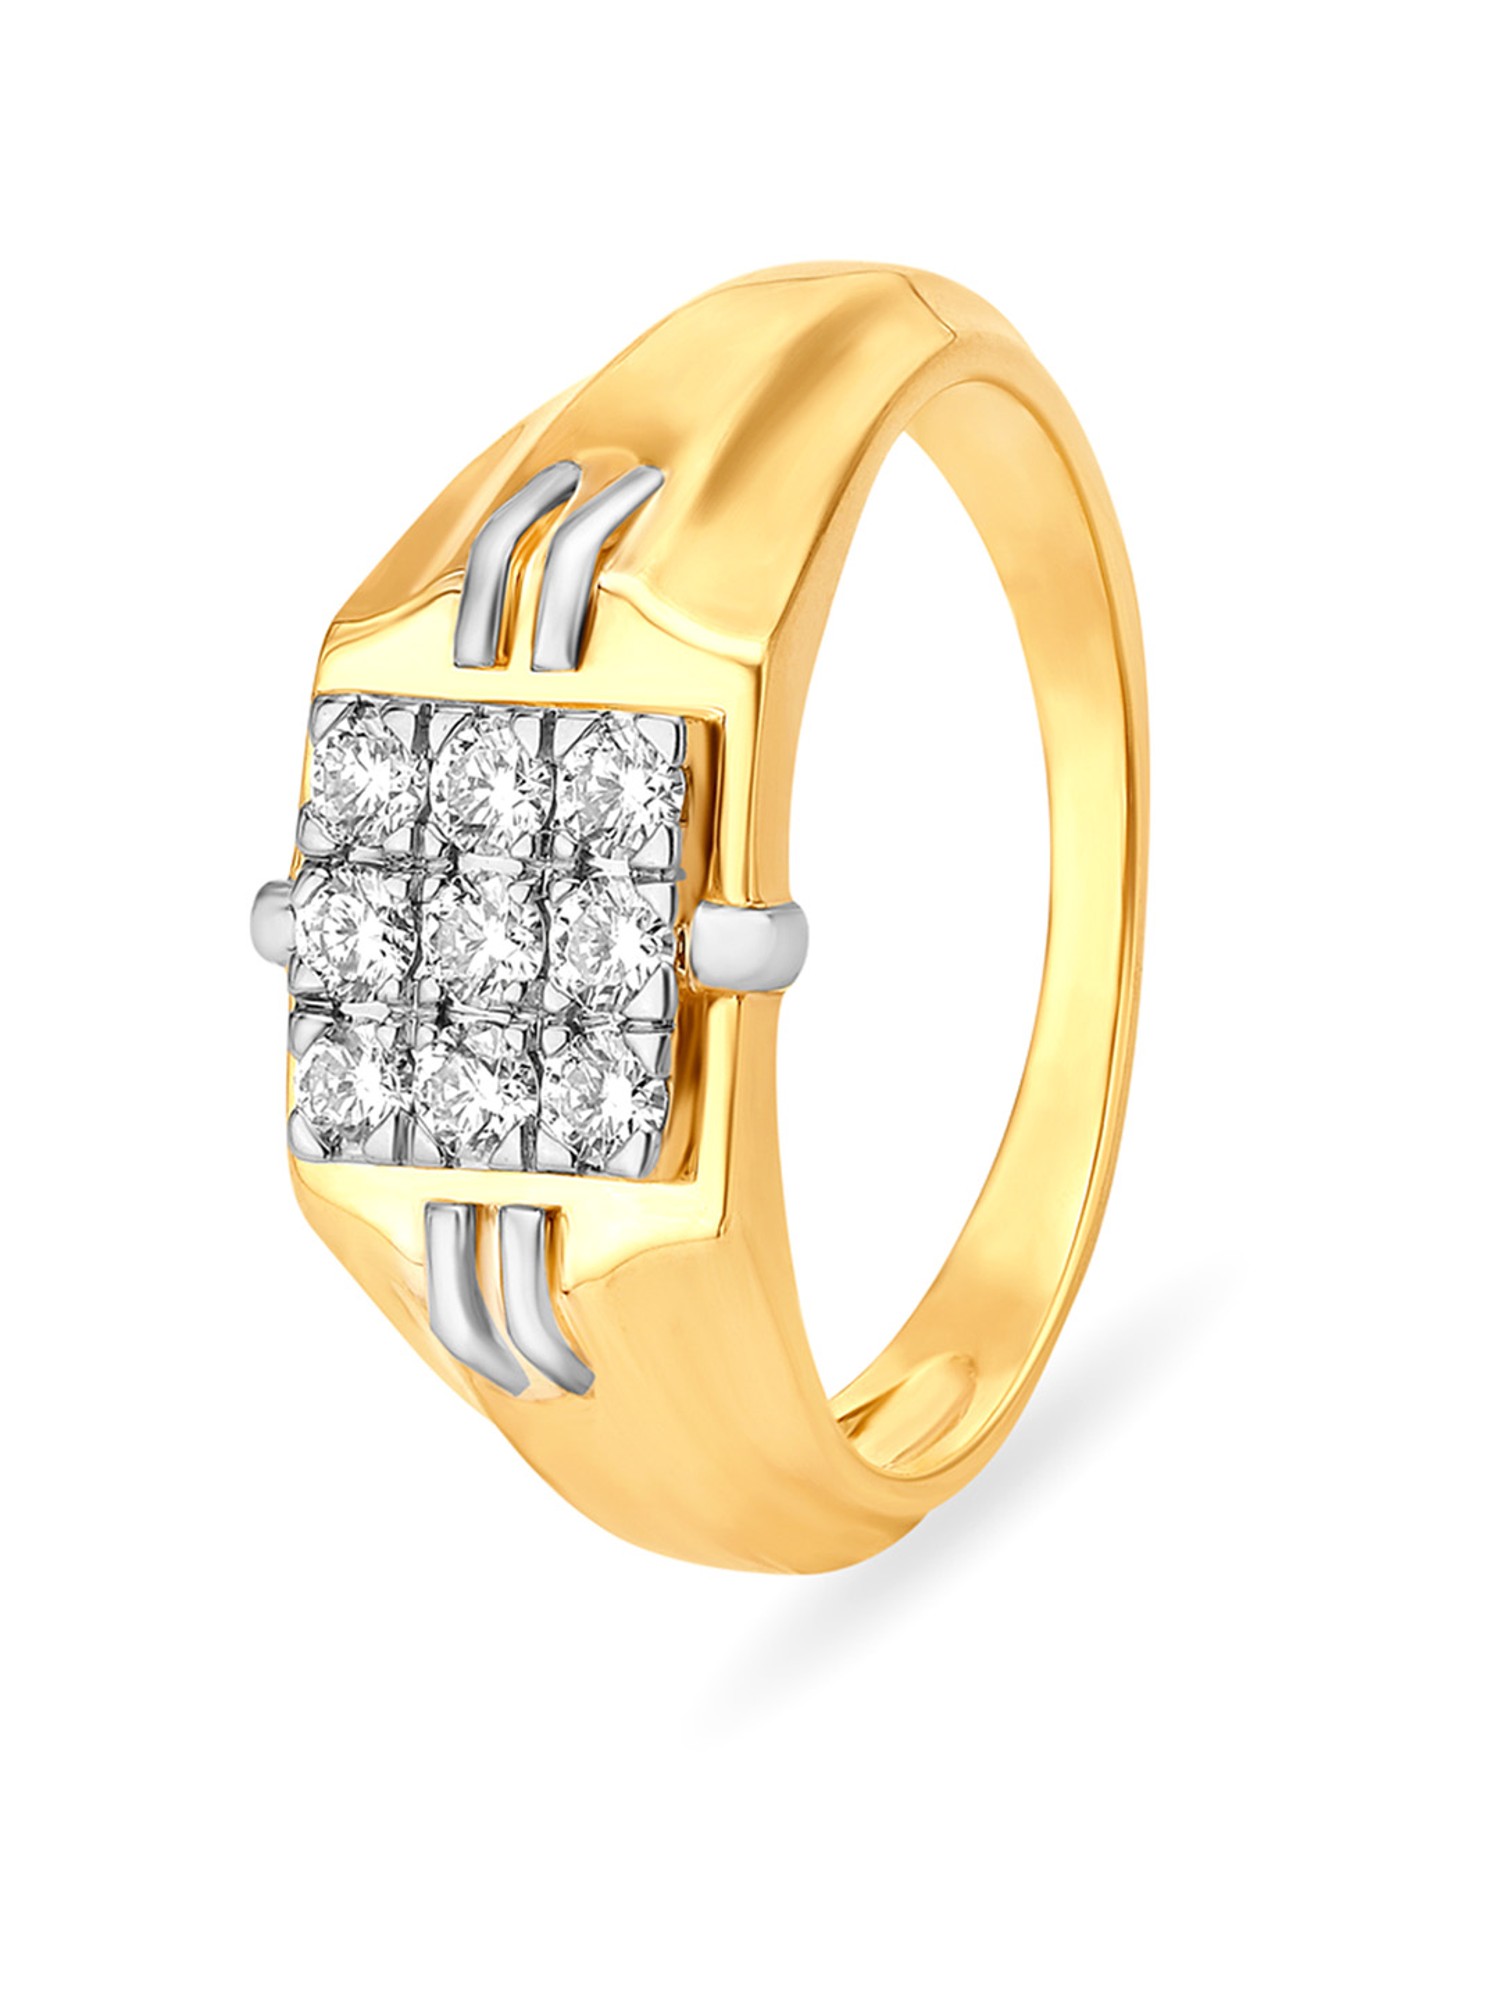 Buy Urbane 18 Karat Gold And Diamond Ring at Best Price | Tanishq UAE